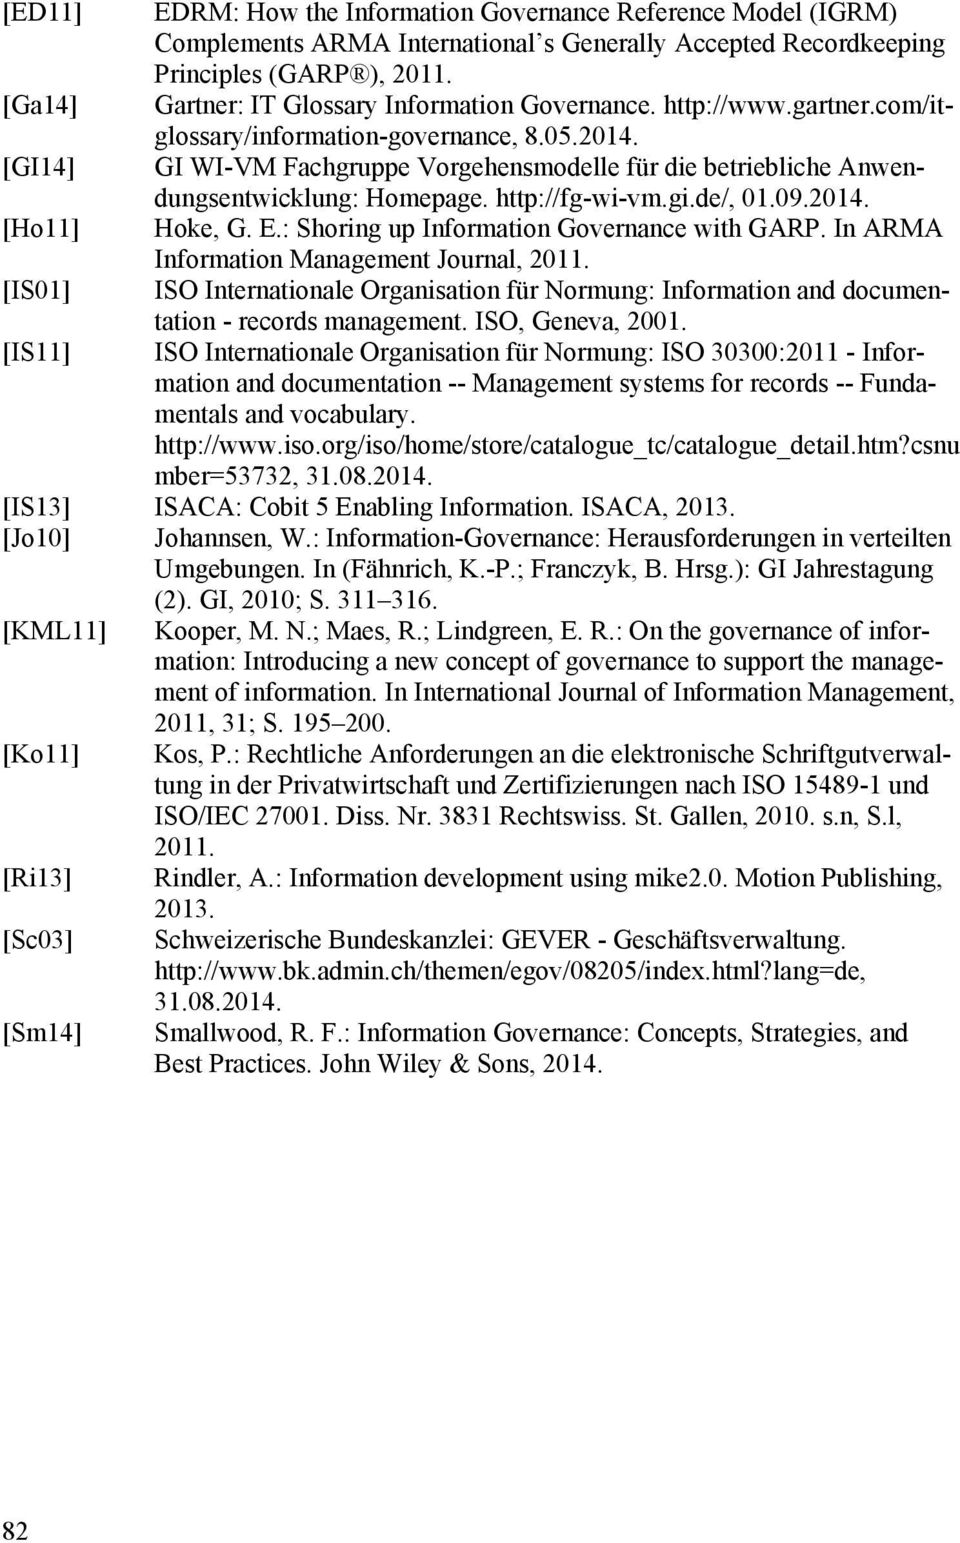 [GI14] GI WI-VMFachgruppe Vorgehensmodelle fürdie betriebliche Anwendungsentwicklung: Homepage. http://fg-wi-vm.gi.de/, 01.09.2014. [Ho11] Hoke, G. E.: Shoring up Information Governance with GARP.